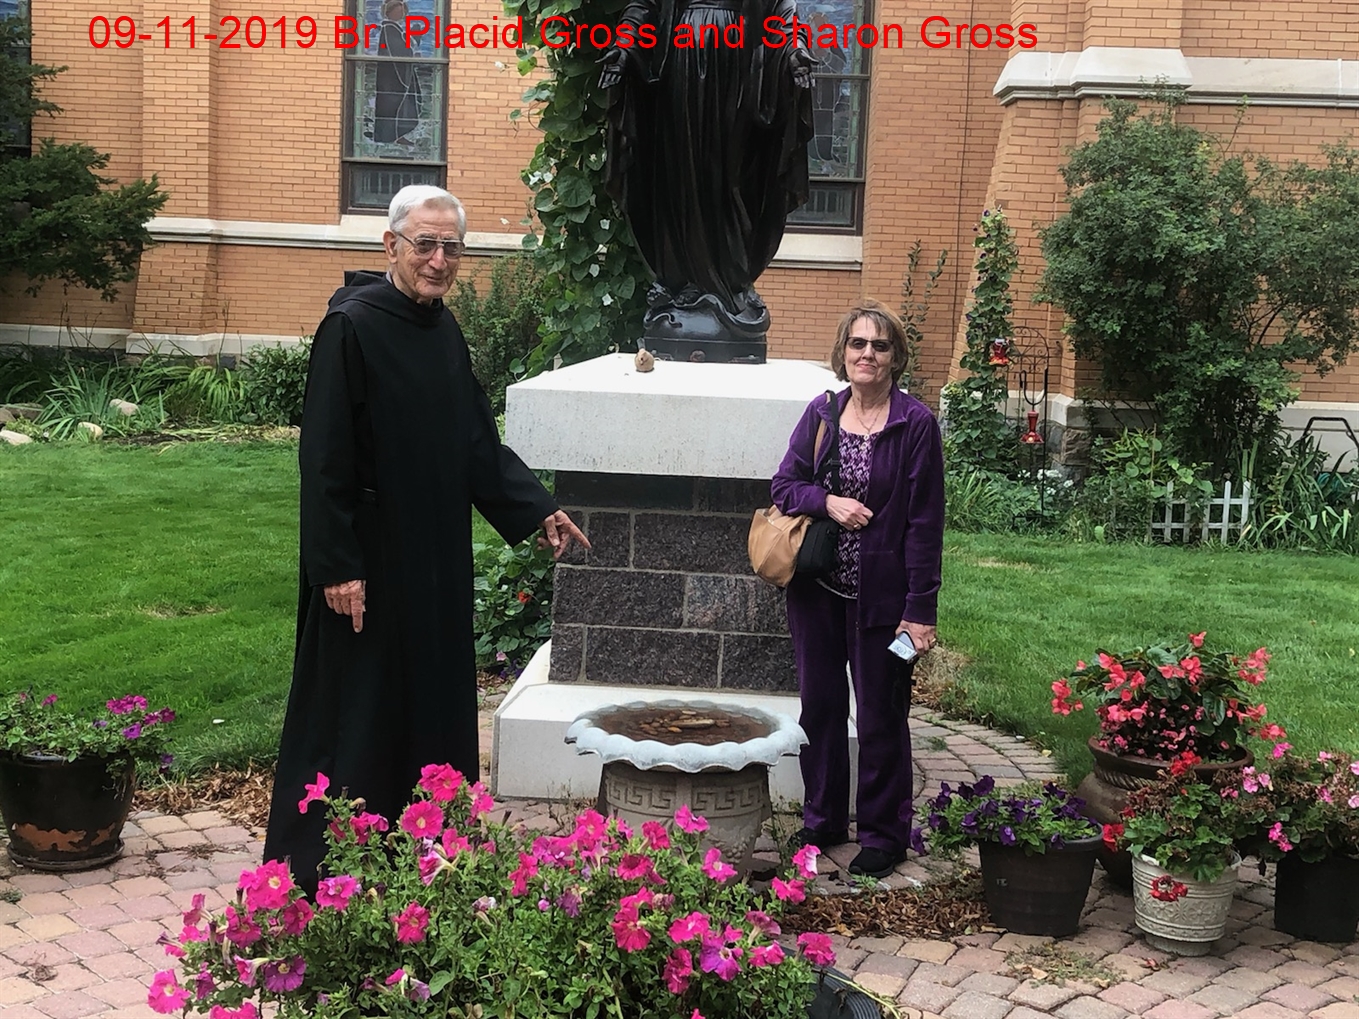 Sept. 11, 2019 Br. Placid Gross and Sharon Gross at the Richardton Abbey